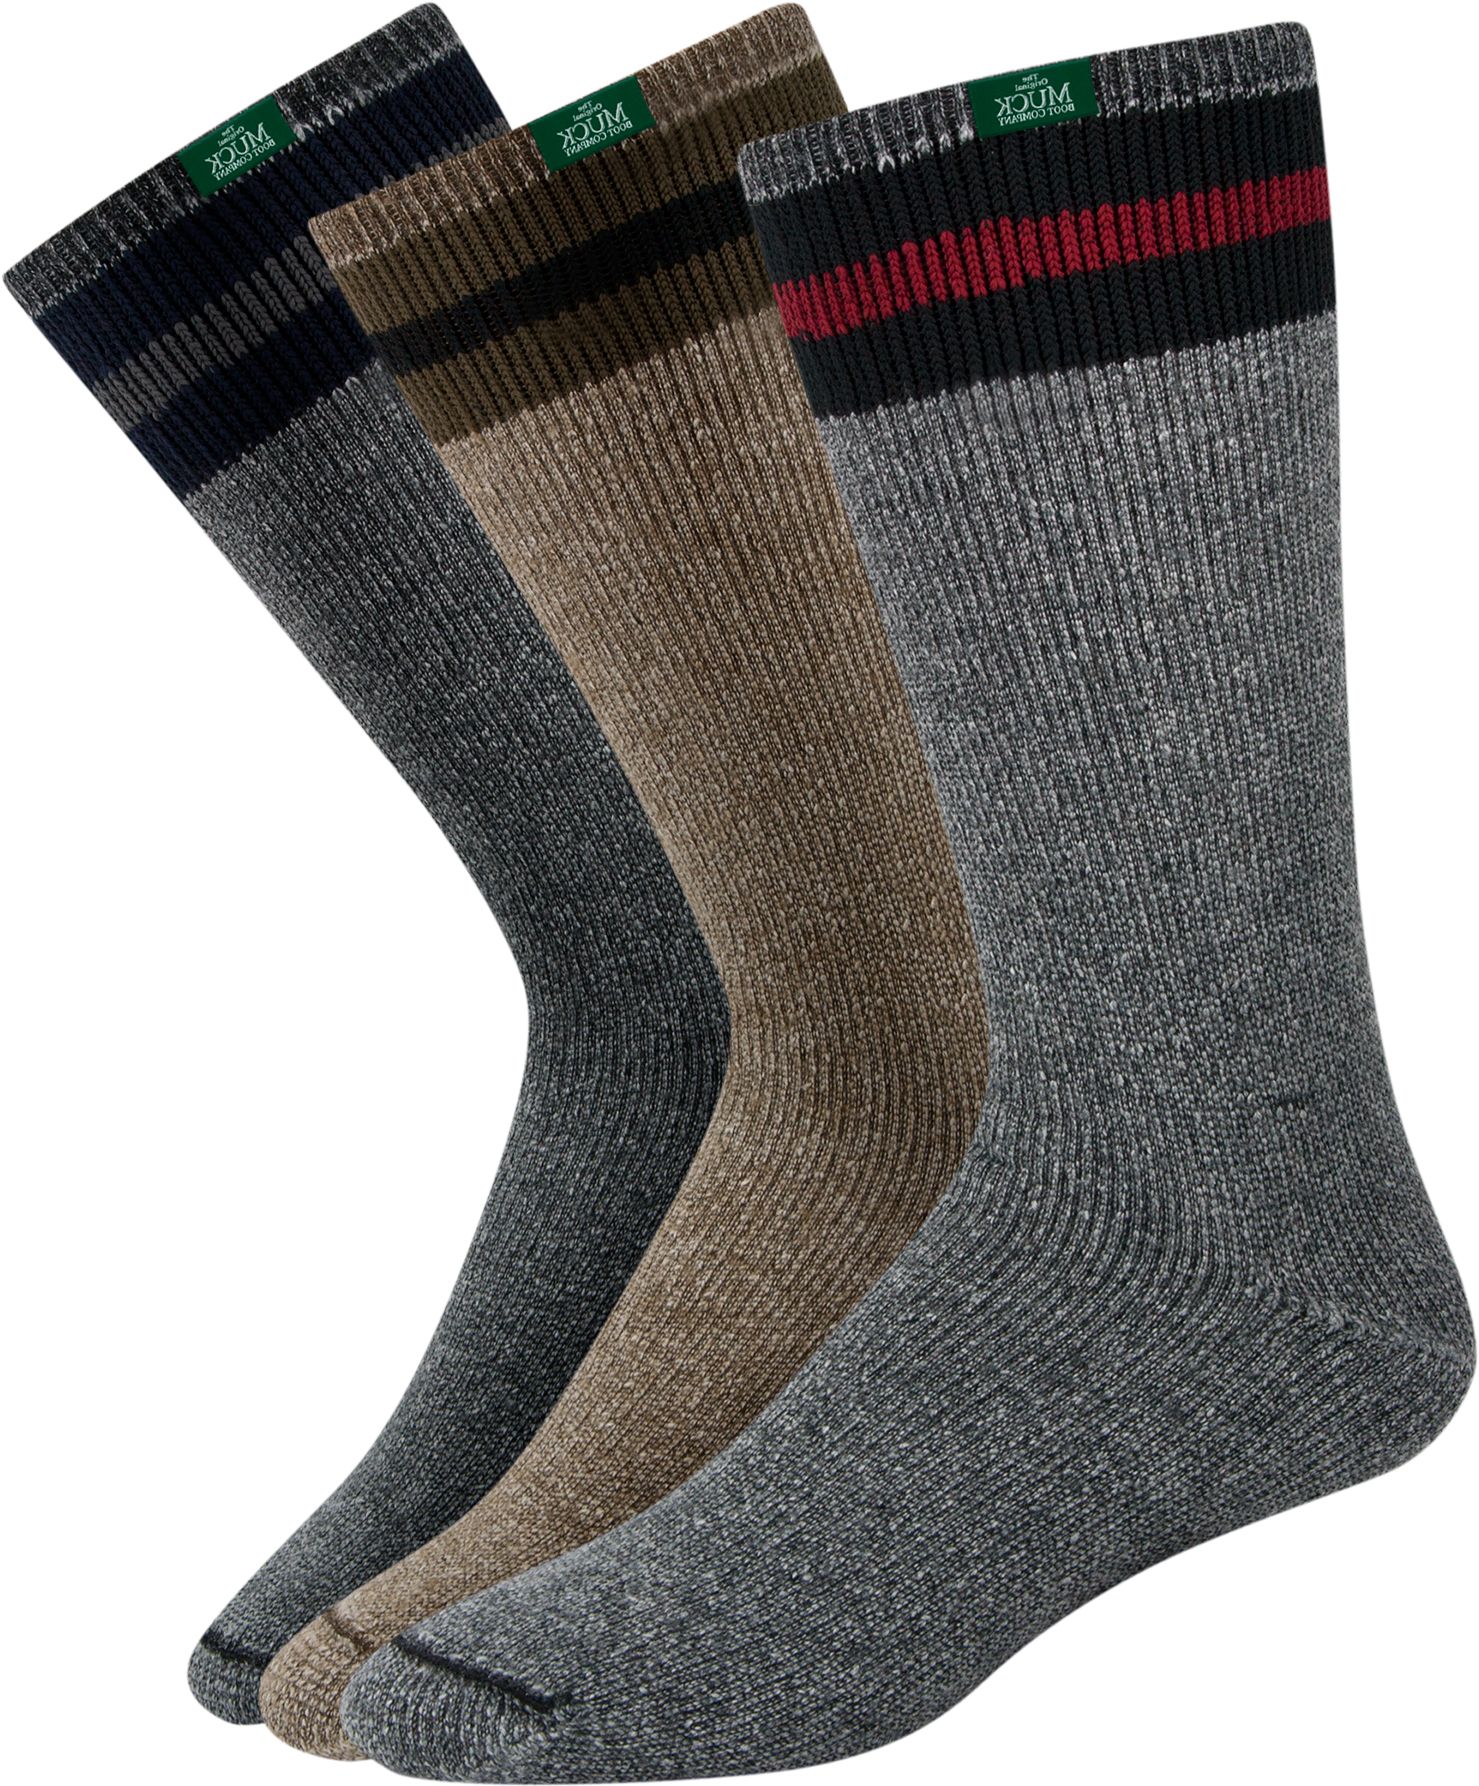 wool boot socks